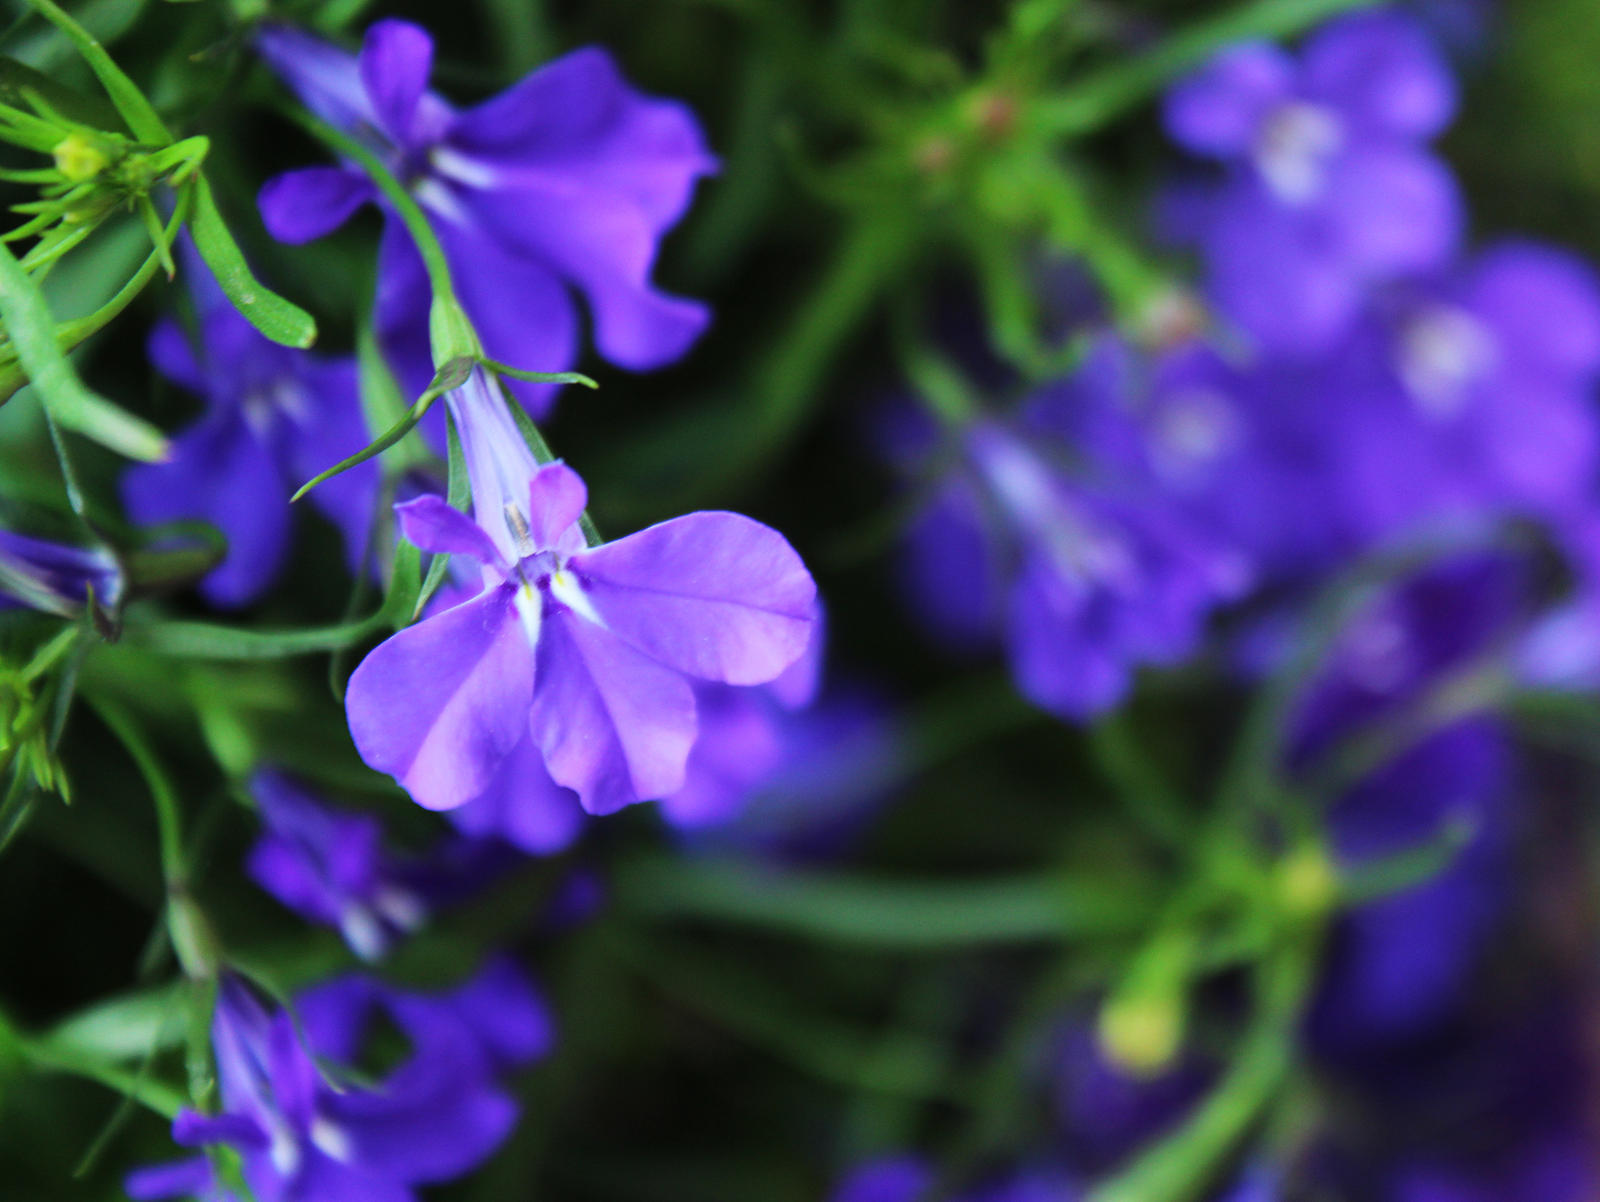 Tiny Purple Flower by emilymhanson on DeviantArt